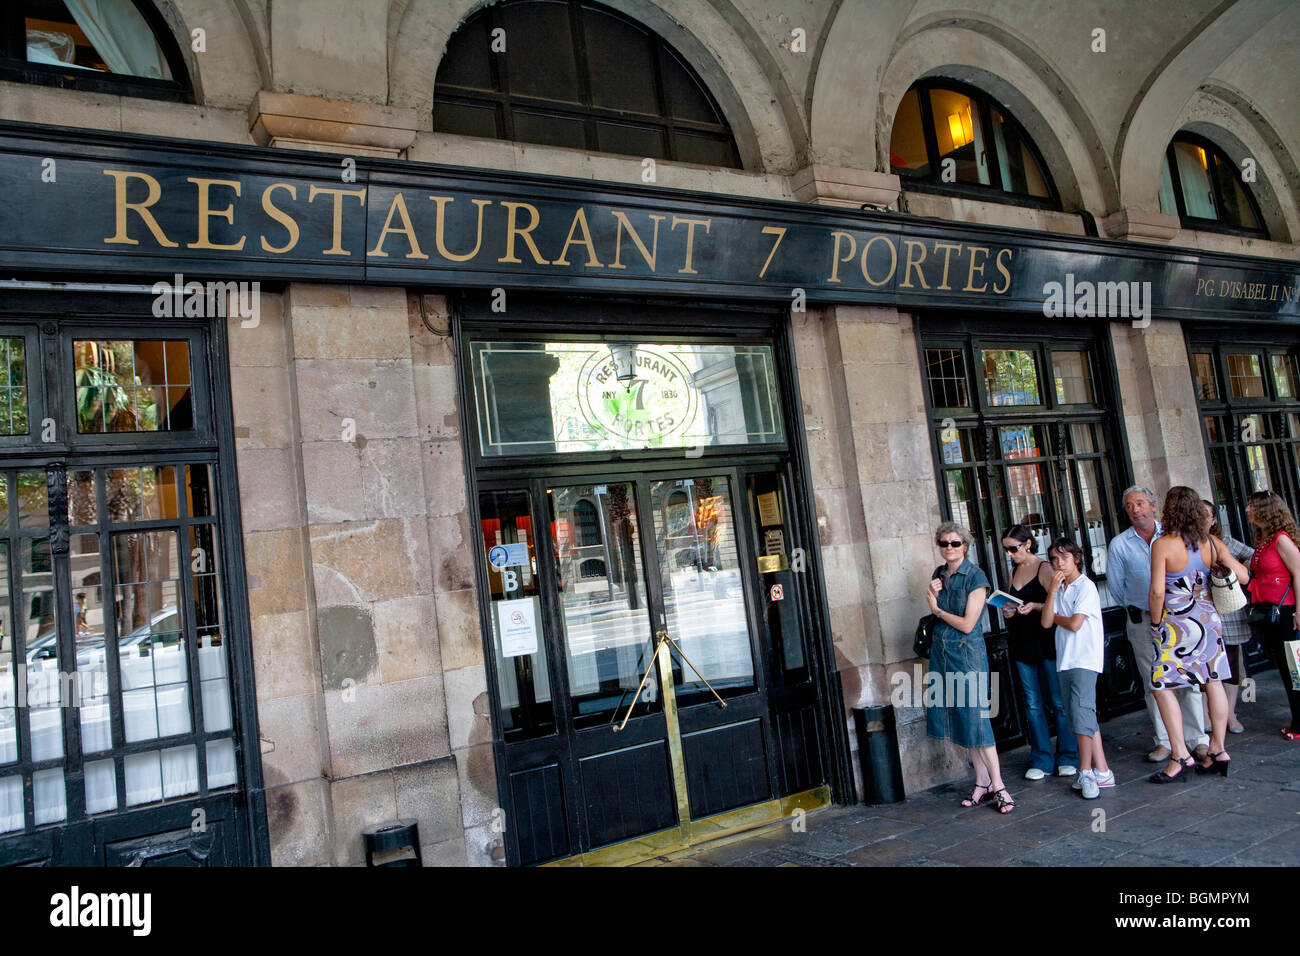 Barcelona - Restaurant 7 Portes - La Ribera district Stock Photo